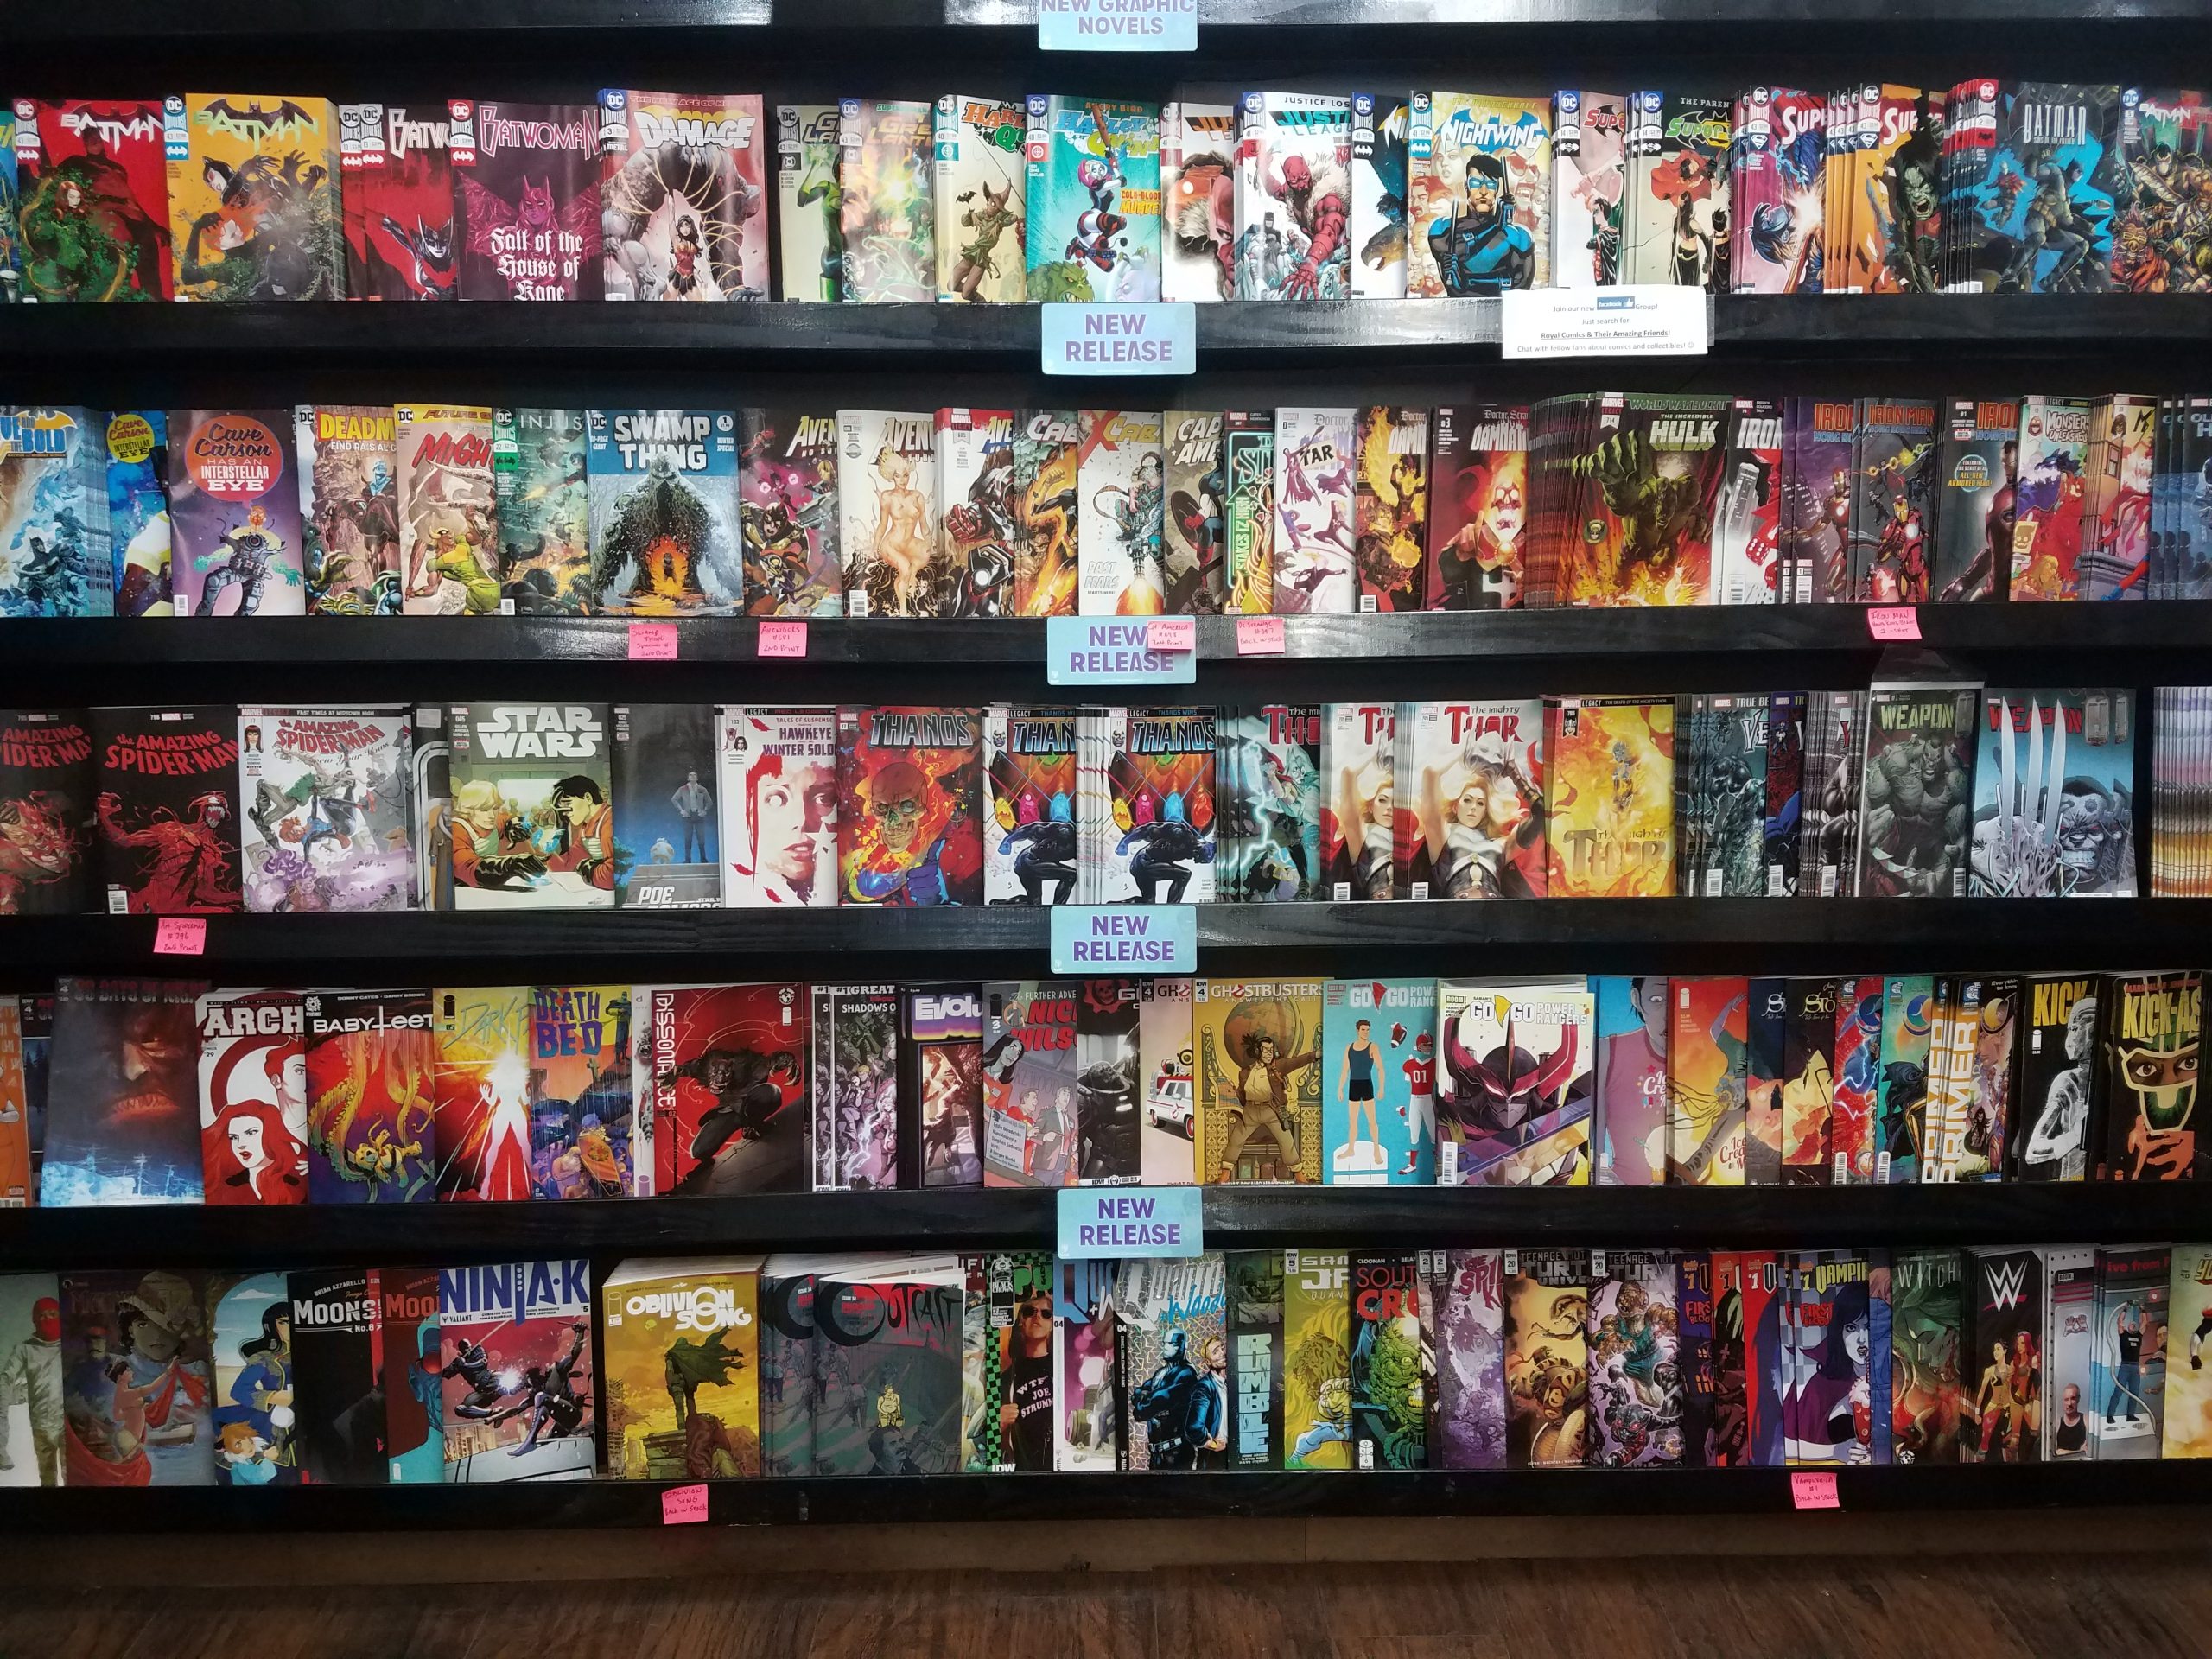 Diamond Comics Distributor to halt all comics and product shipments until further notice